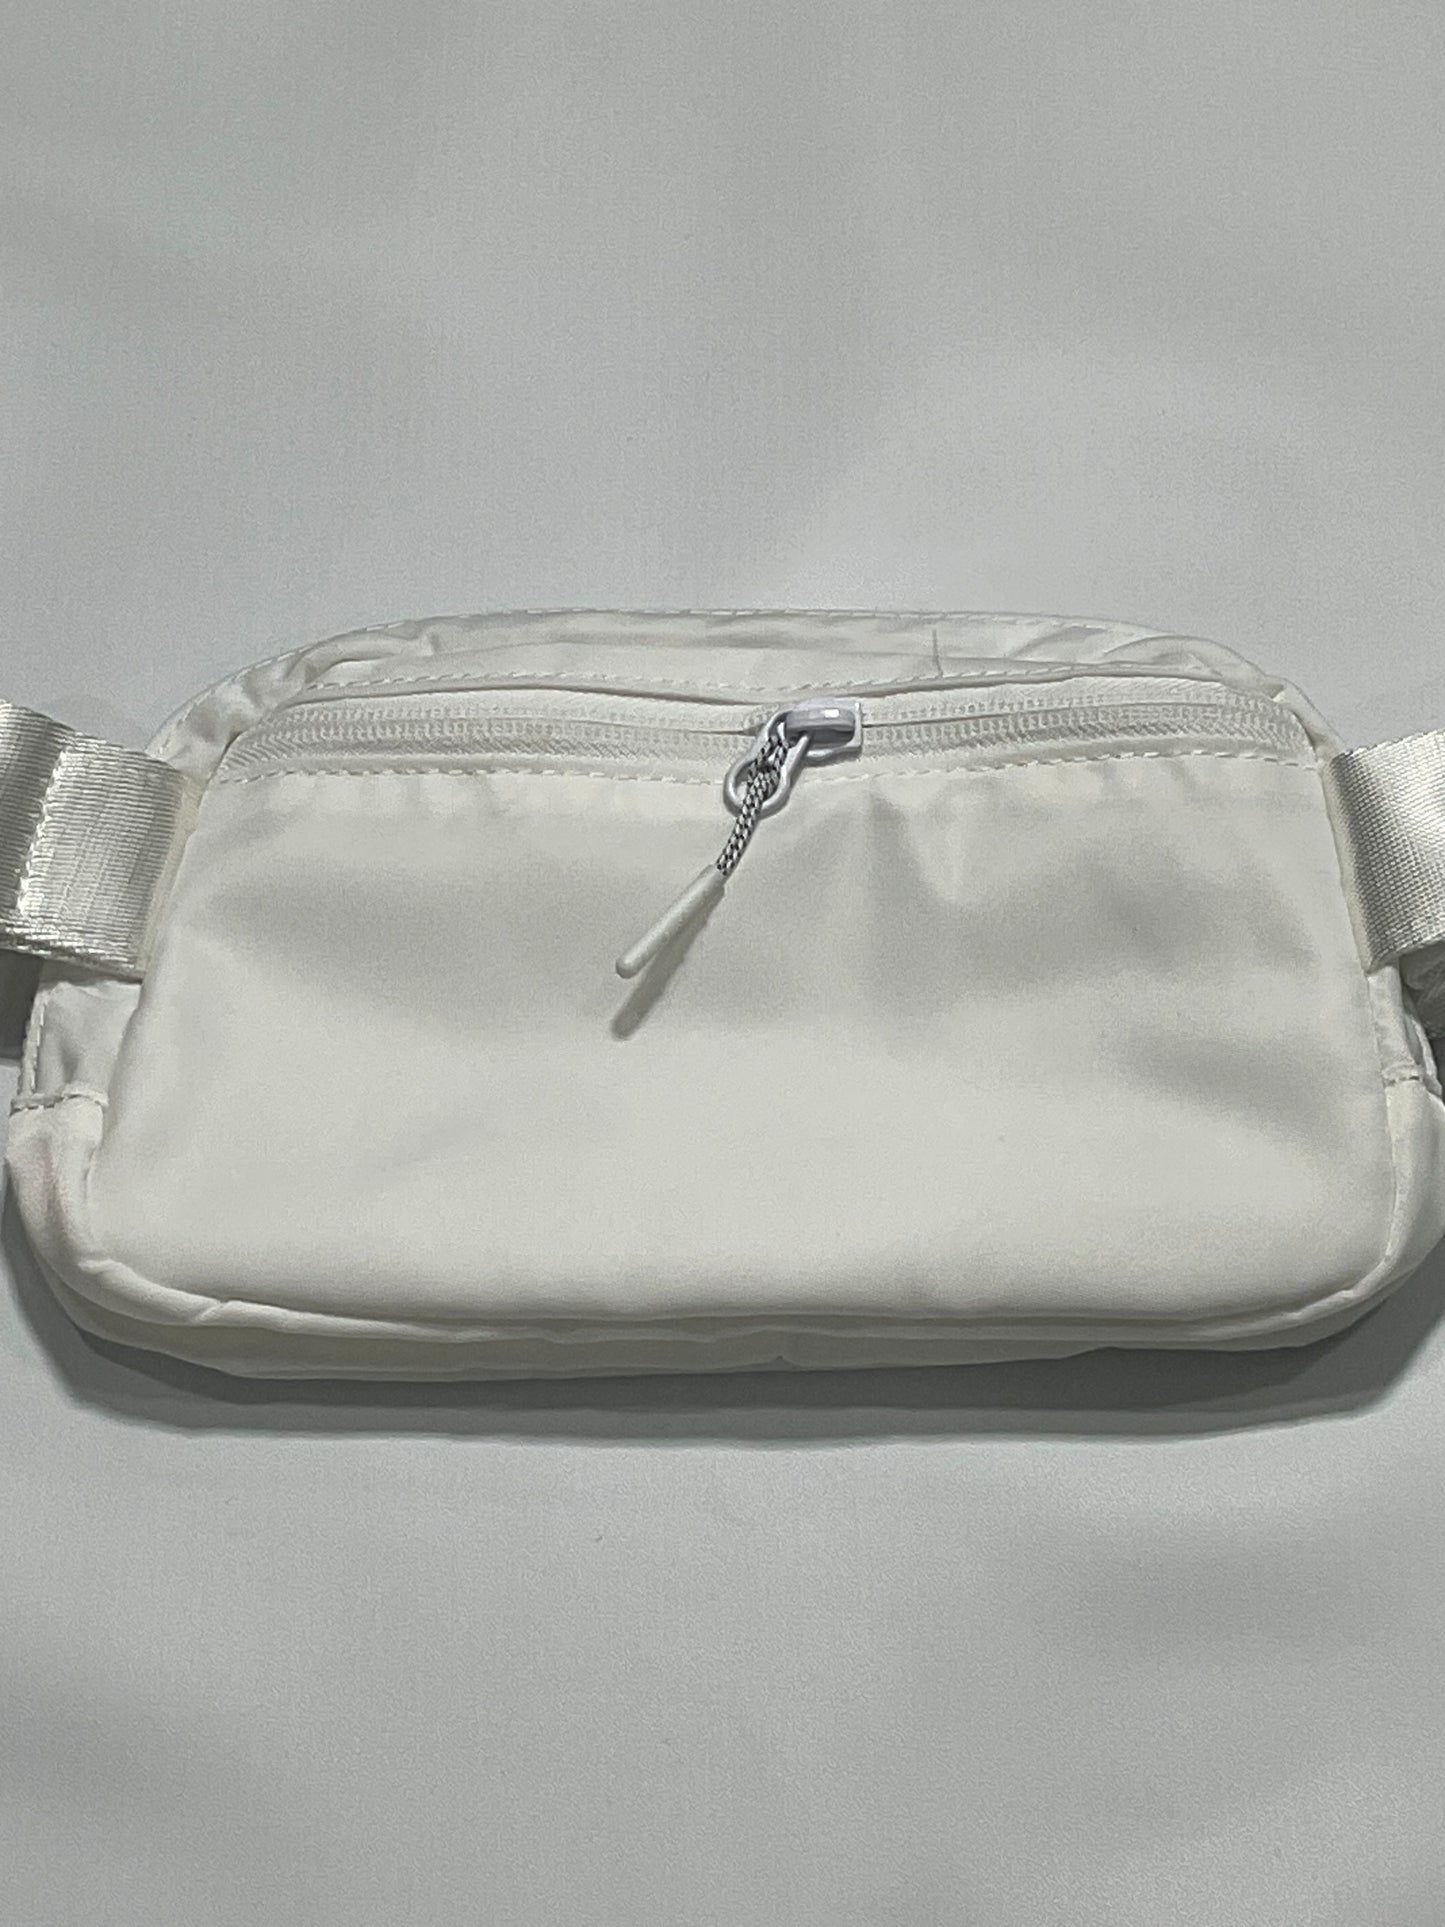 Lululemon Everywhere Belt Bag 1L - White